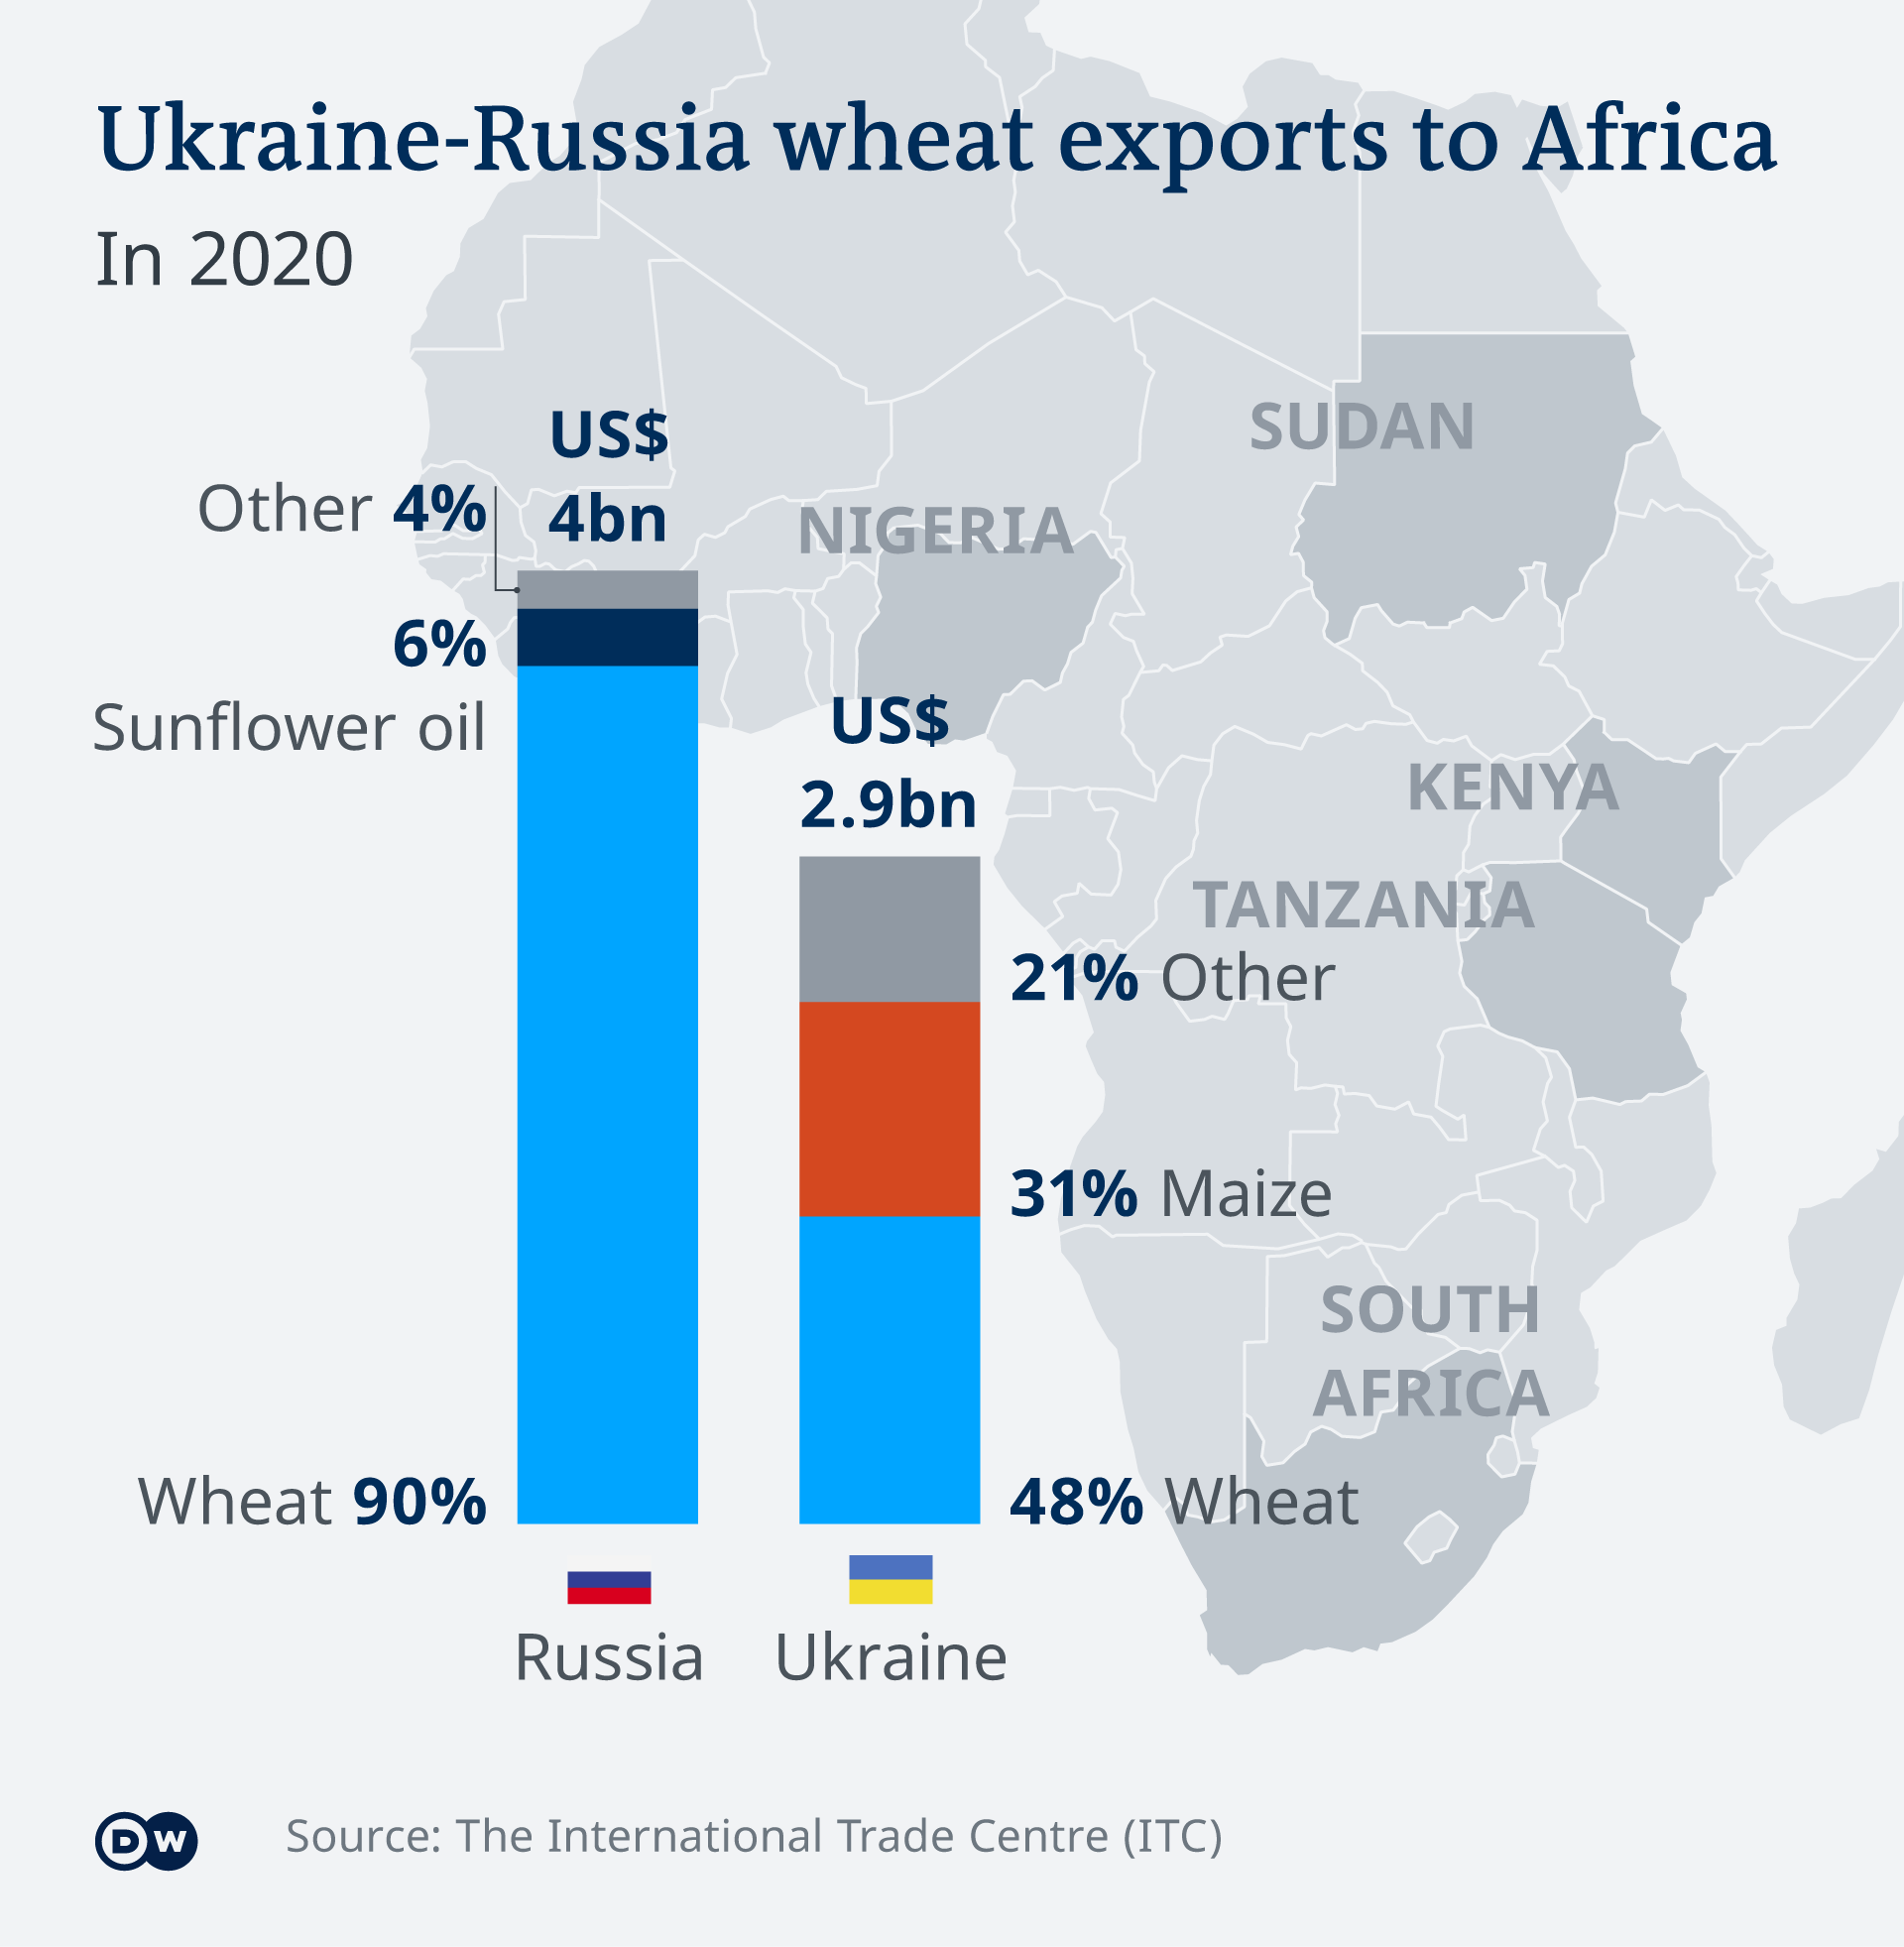 Ukraine-Russia wheat exports to Africa